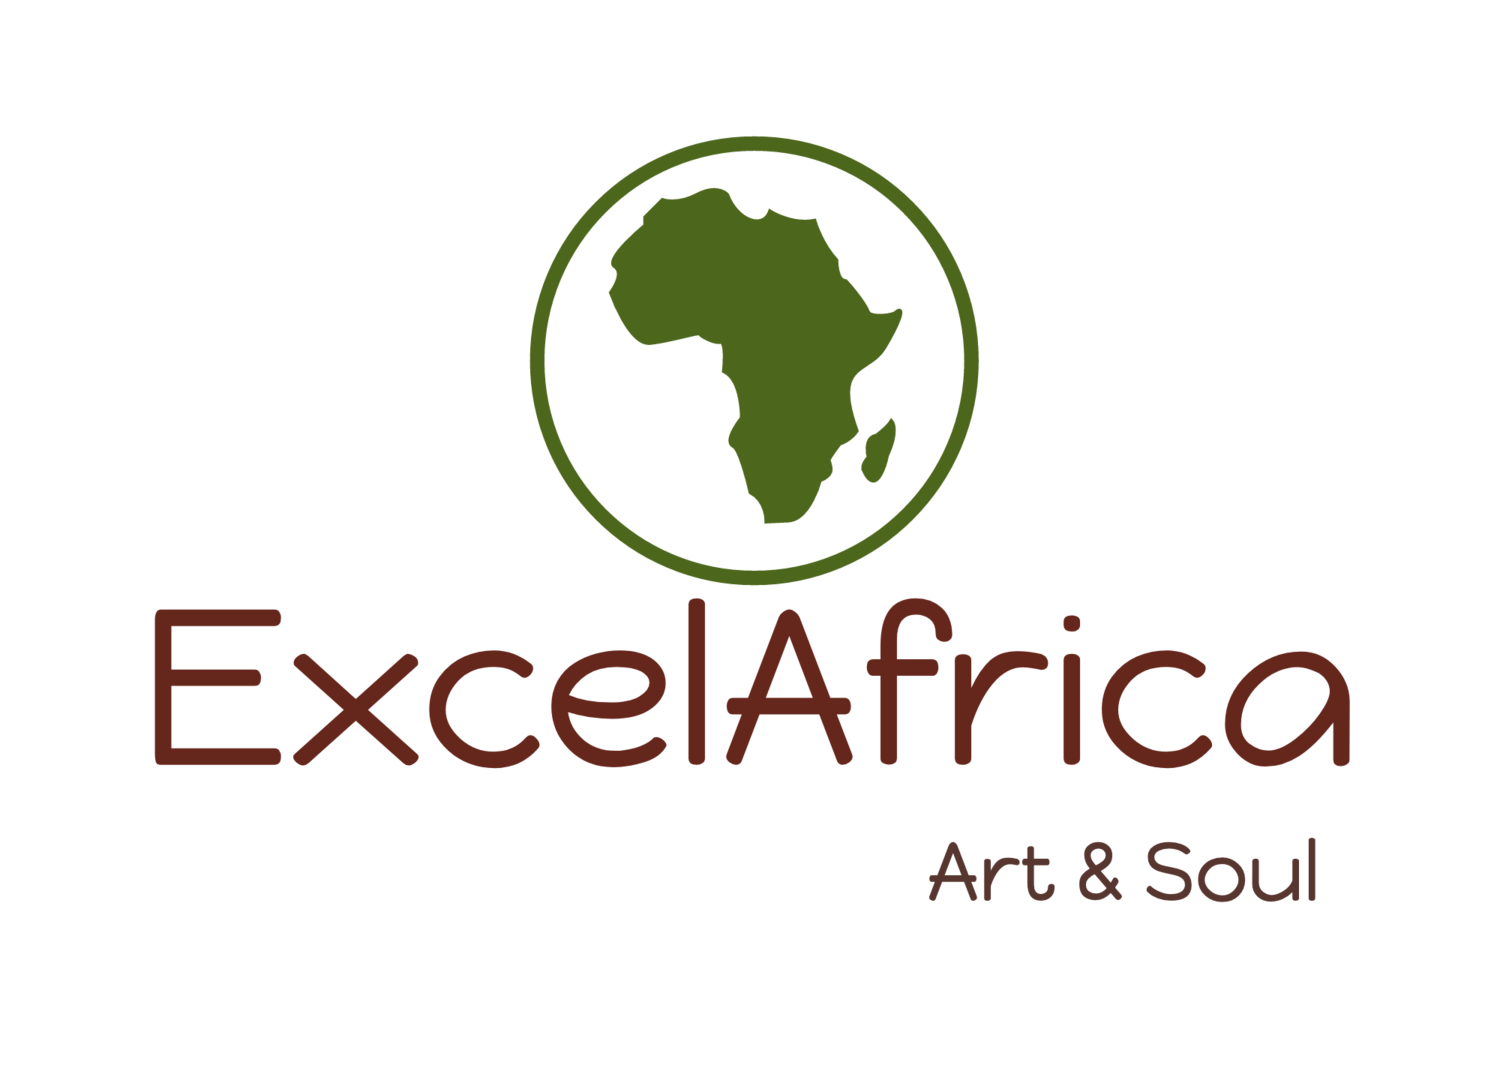 Excel Africa